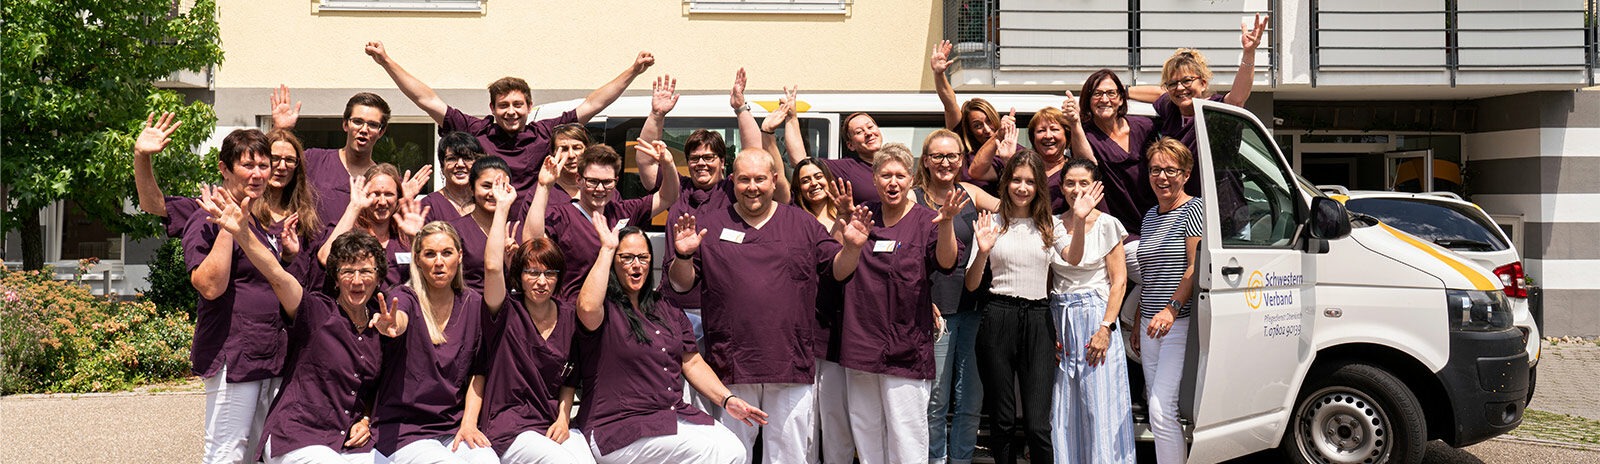 Schwesternverband ambulante Pflege gGmbH Service-Center Oberkirch